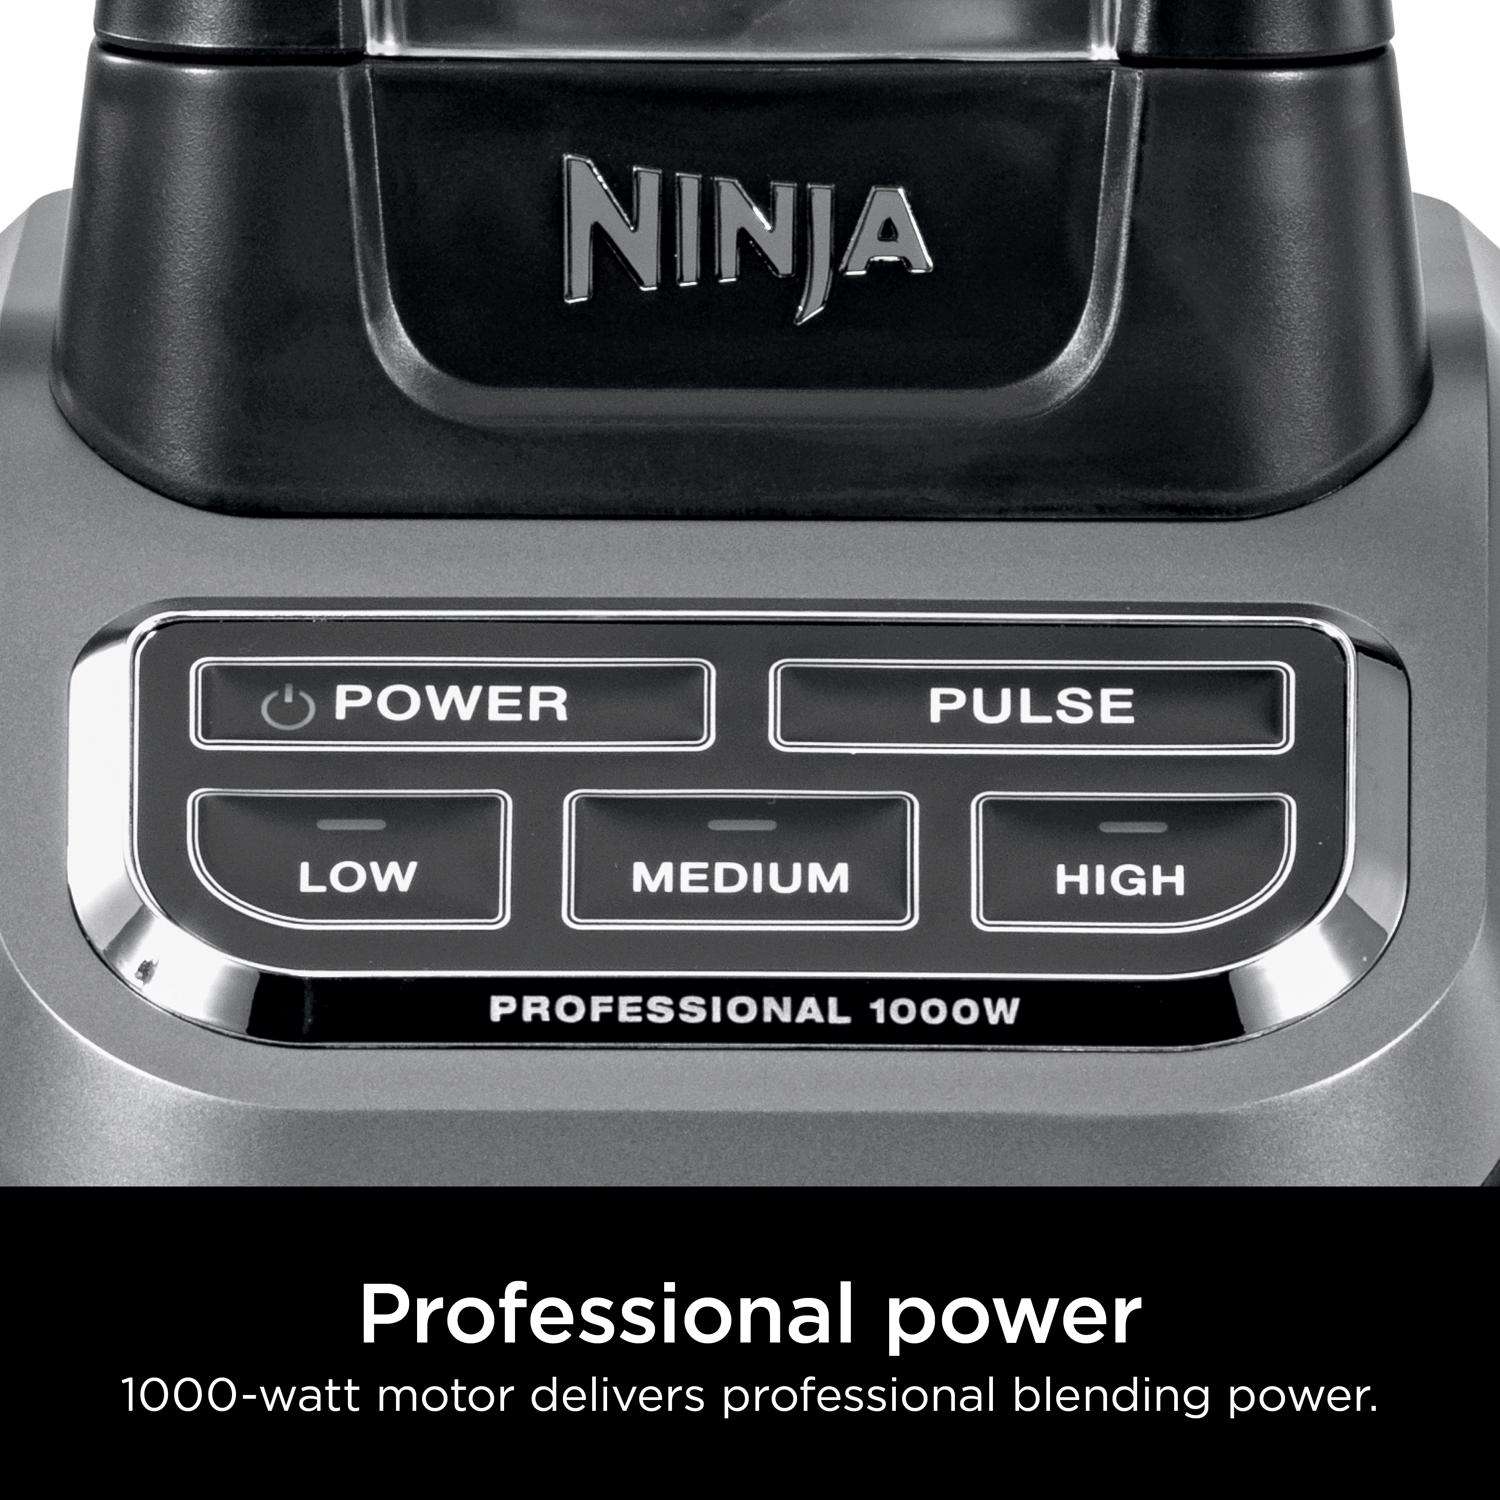  Ninja BL610 Professional Blender with Total Crushing  Technology, 1000-Watts, Black (Renewed): Home & Kitchen